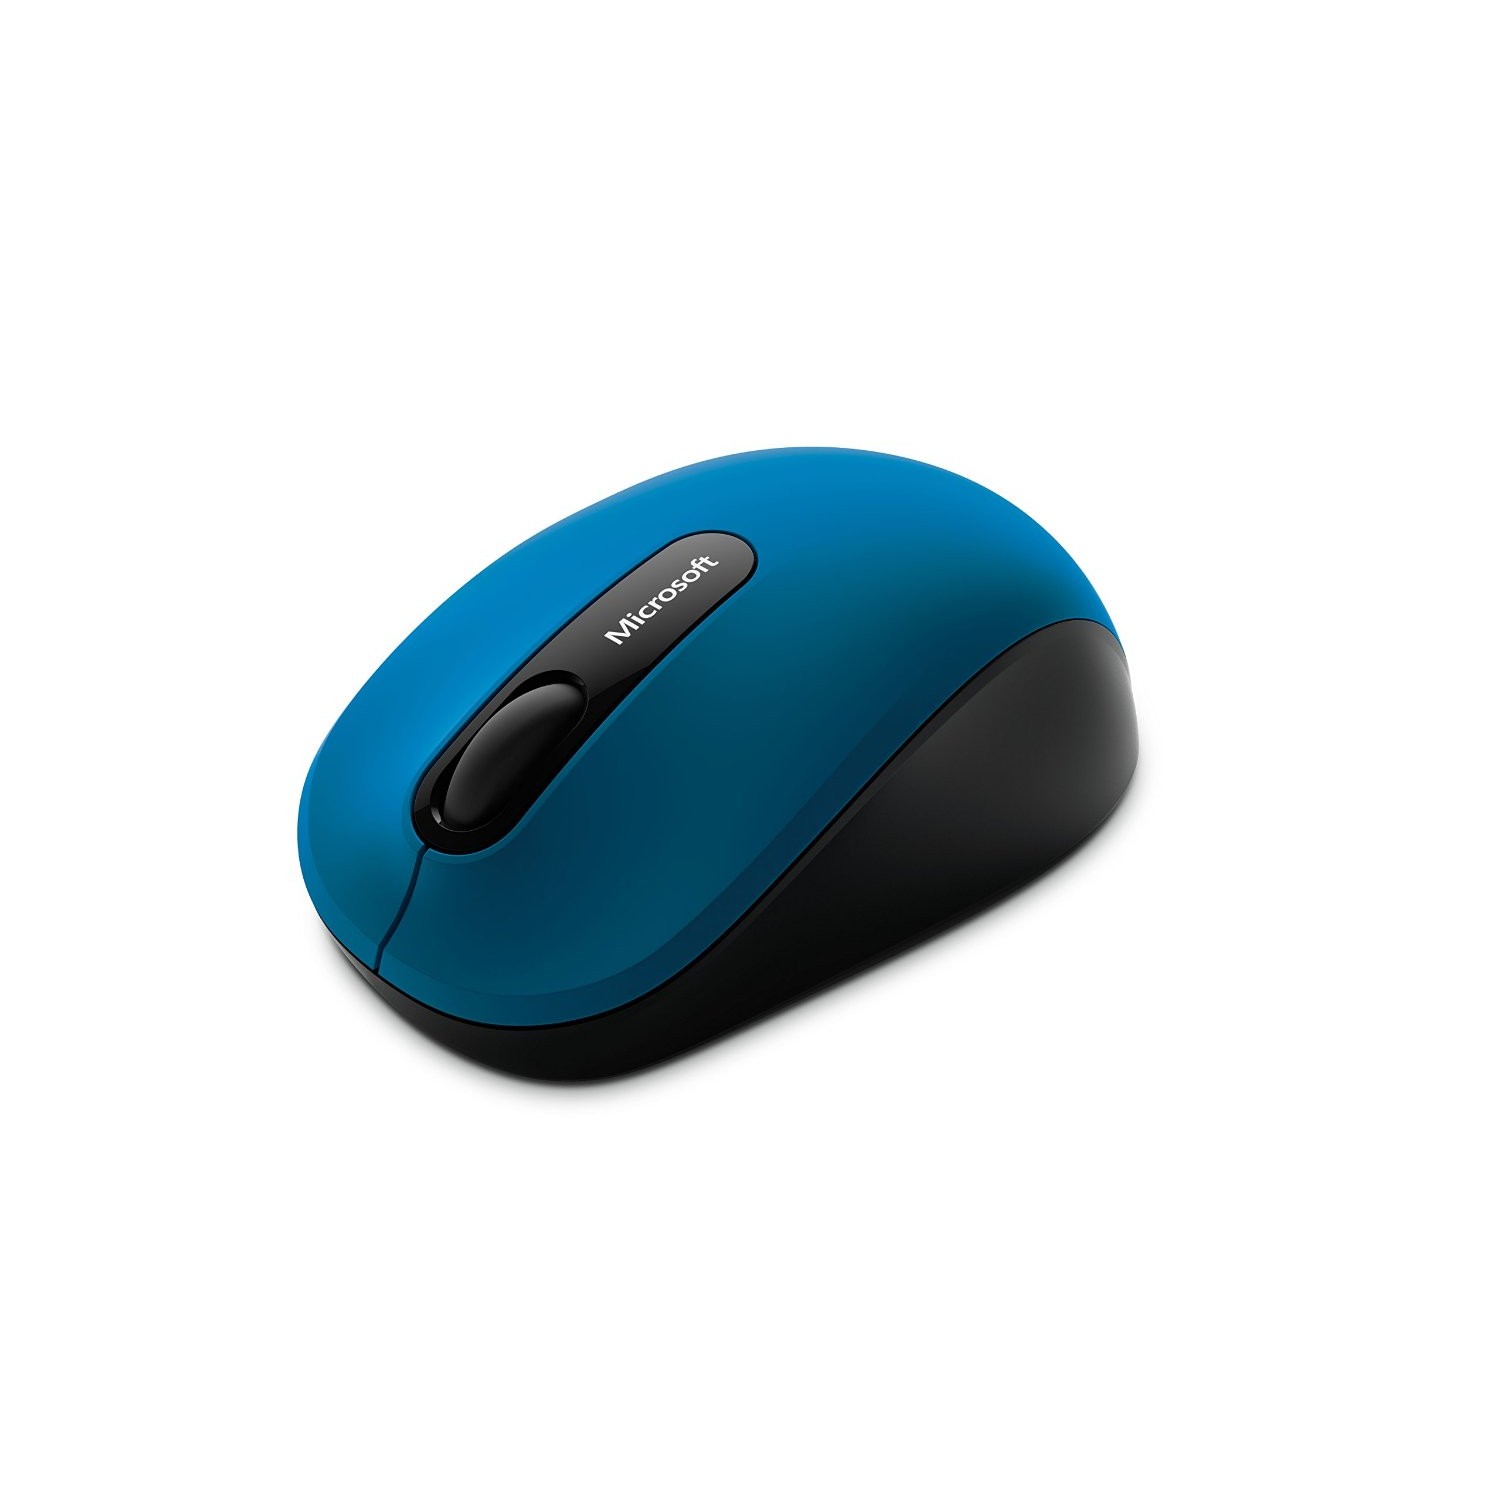  Microsoft Mobile 3600 Mouse-2